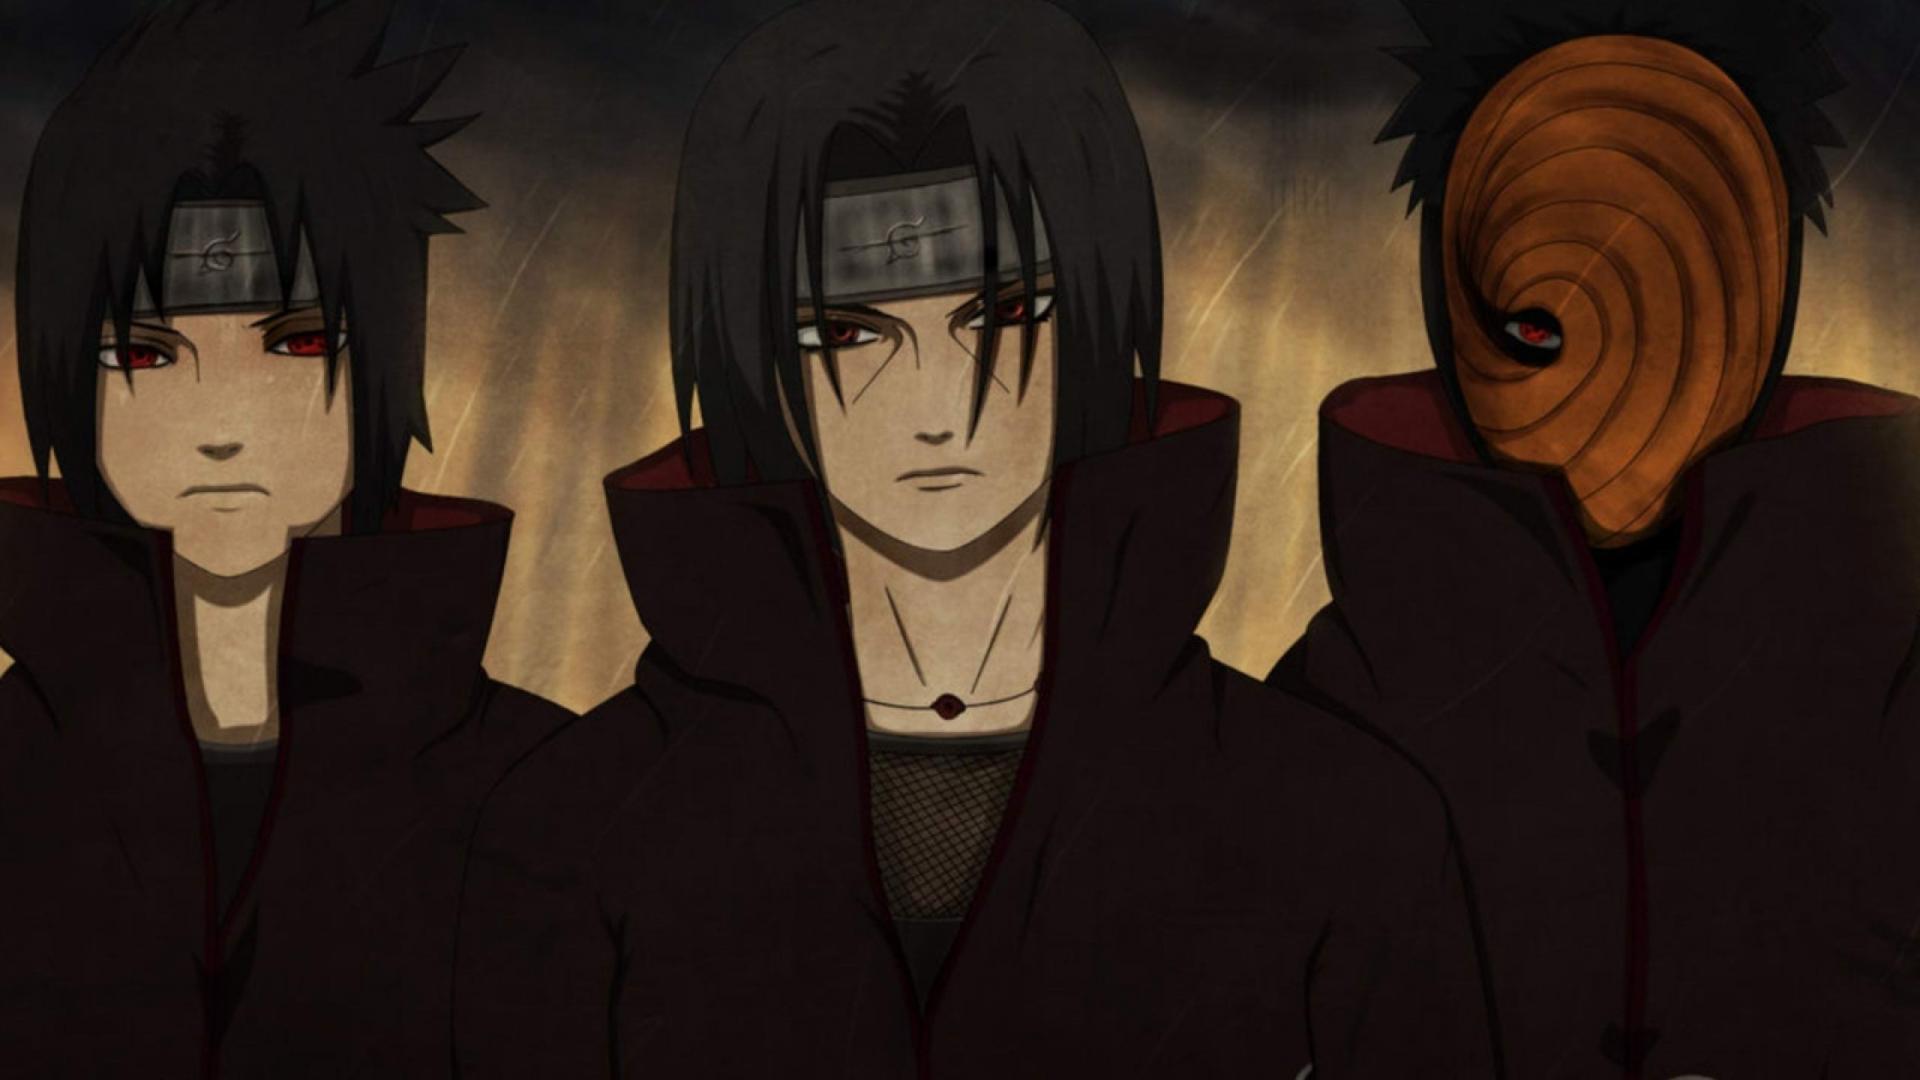 A21 Naruto Uzumaki anime HD Desktop background wallpapers downloads